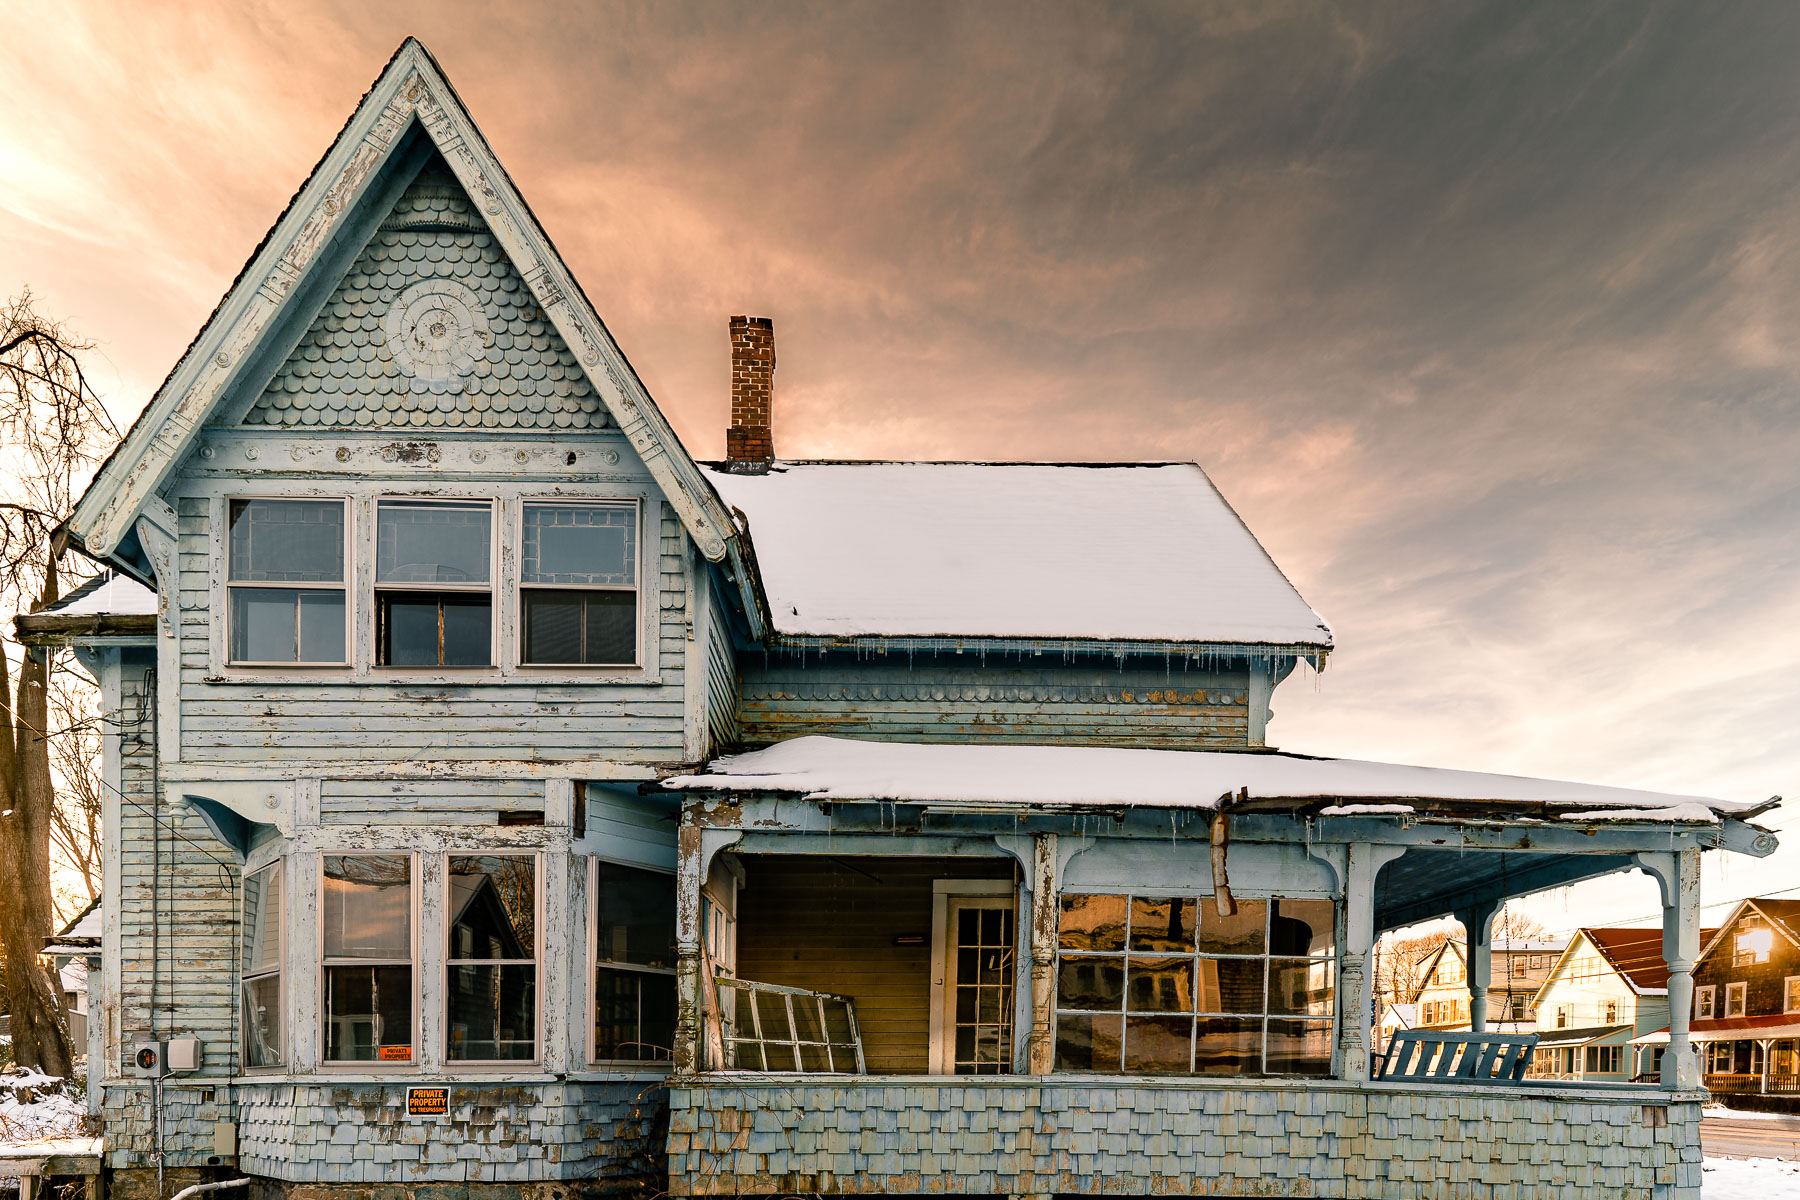 Abandoned house in Narragansett, RI.